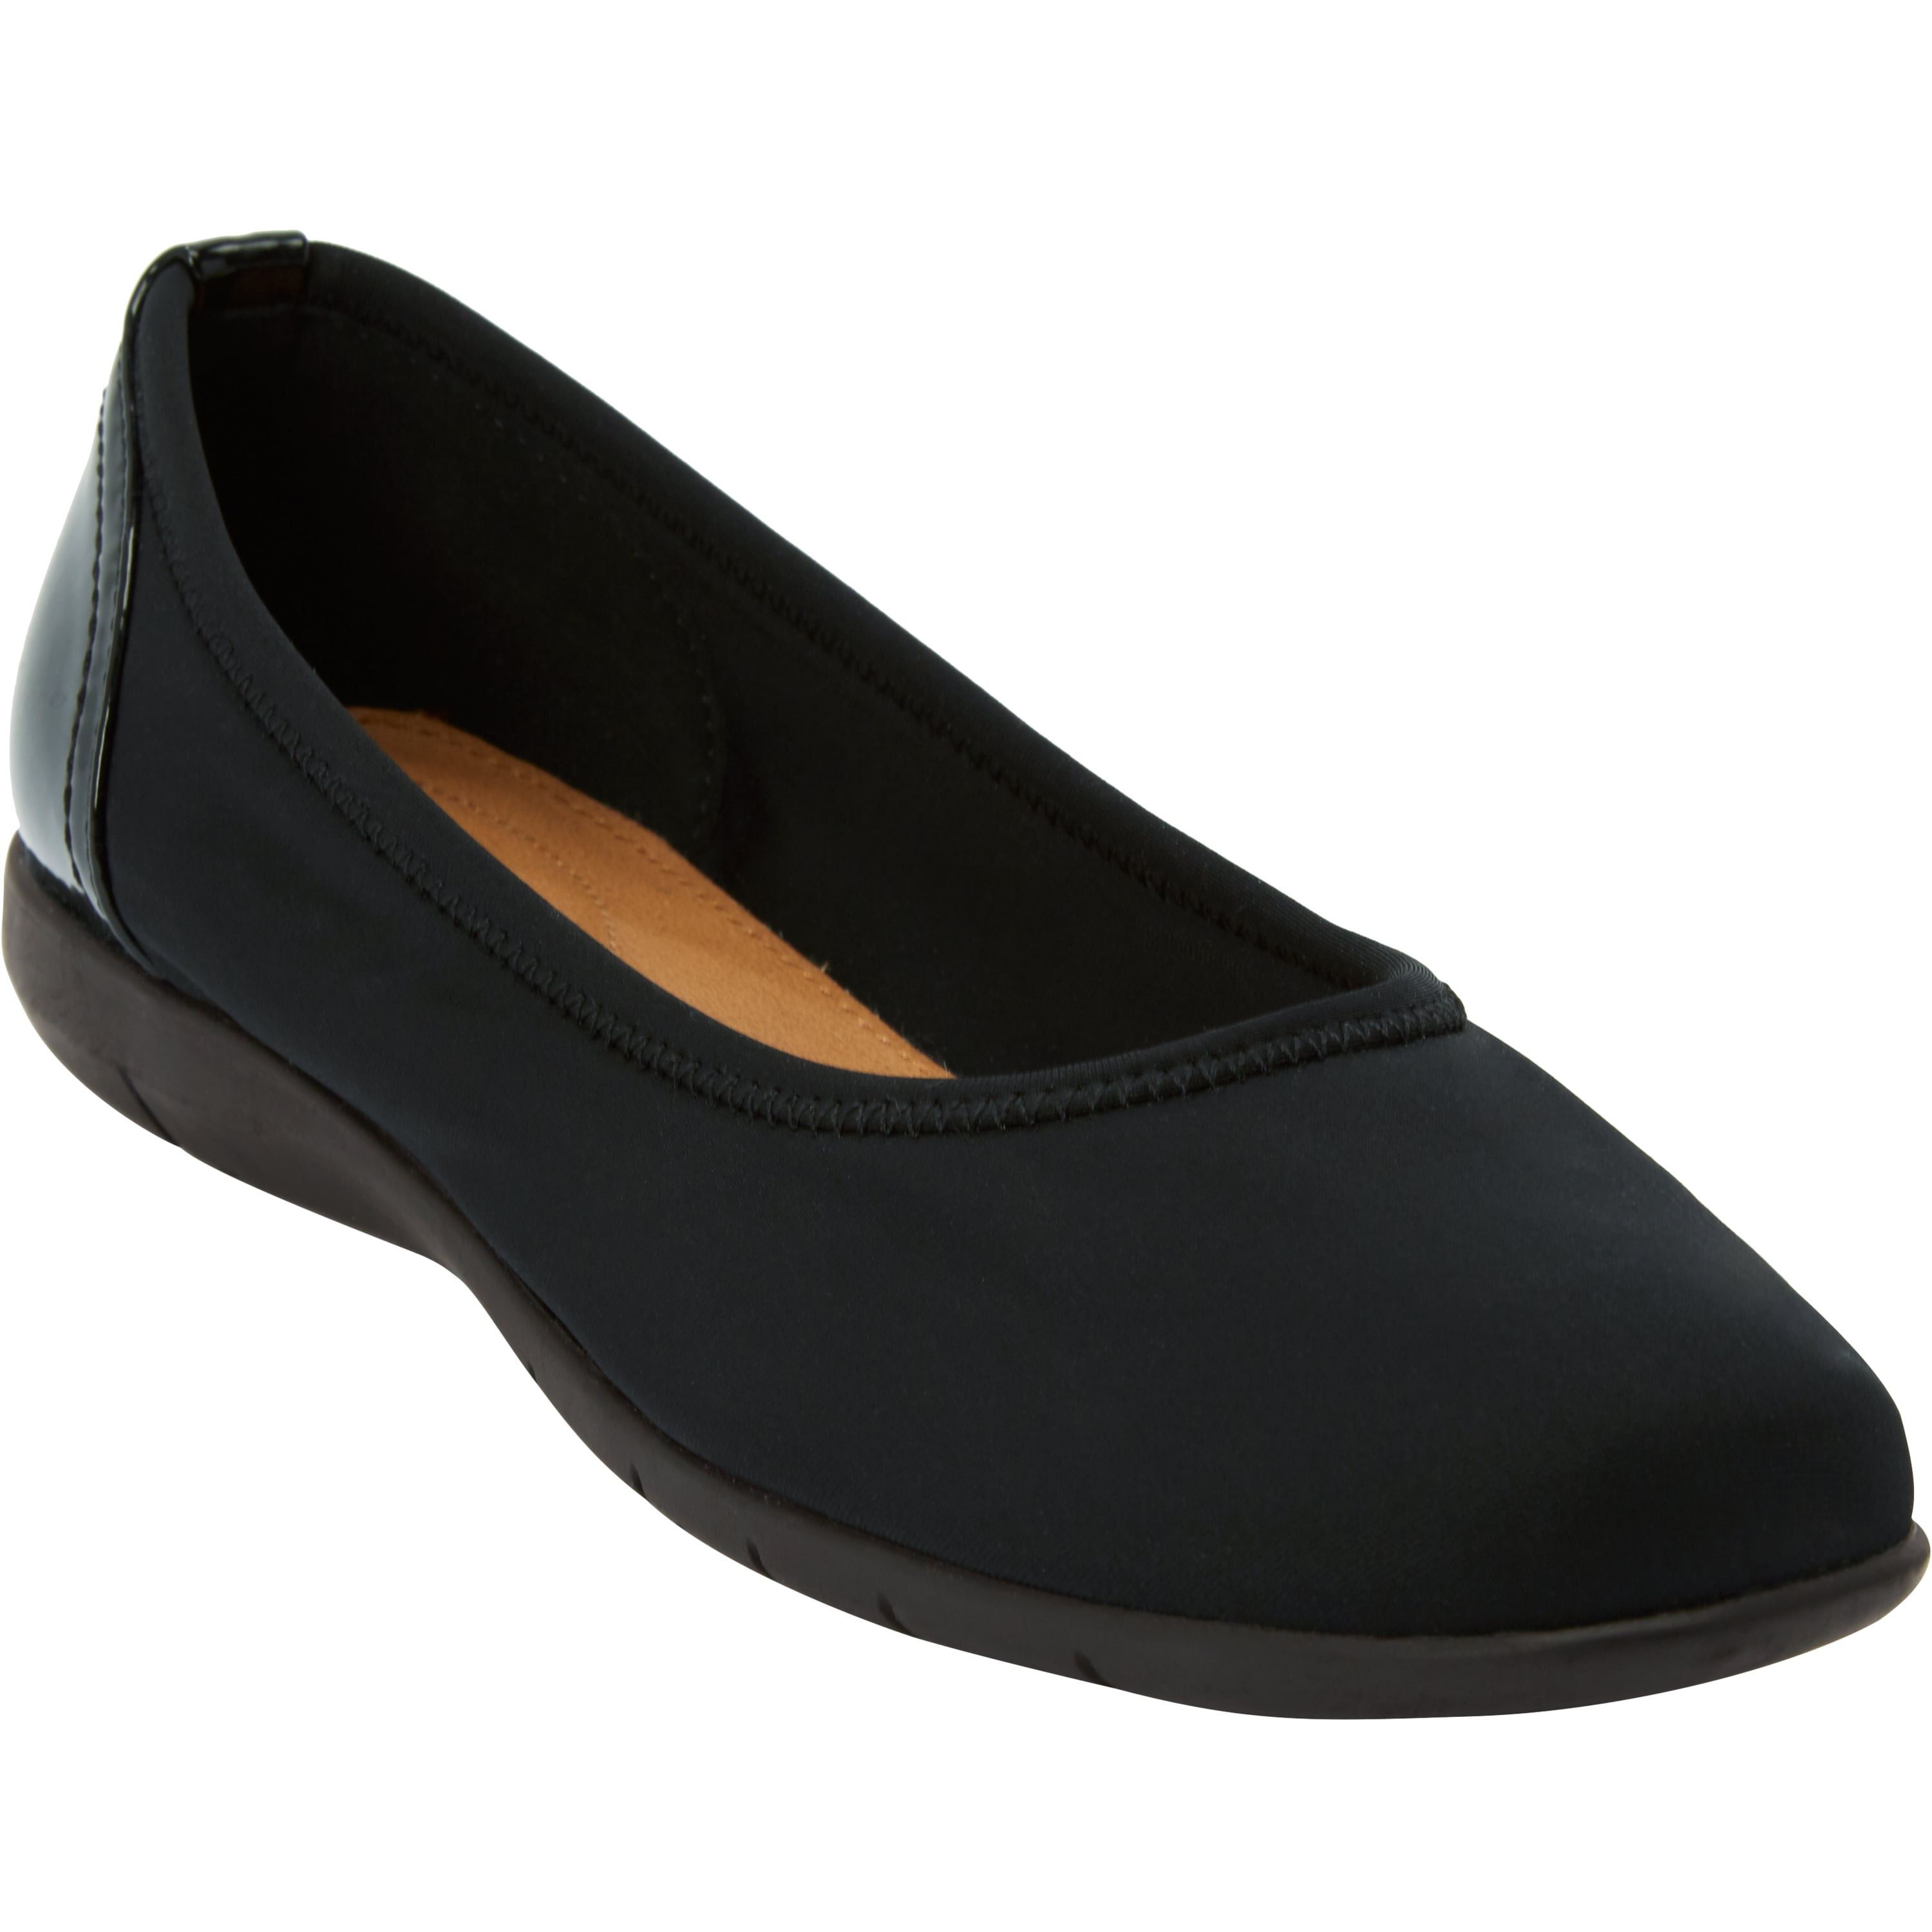 Women's Slip-On Leather Nursing Shoes Natural Uniforms Medium/Wide New 9112 